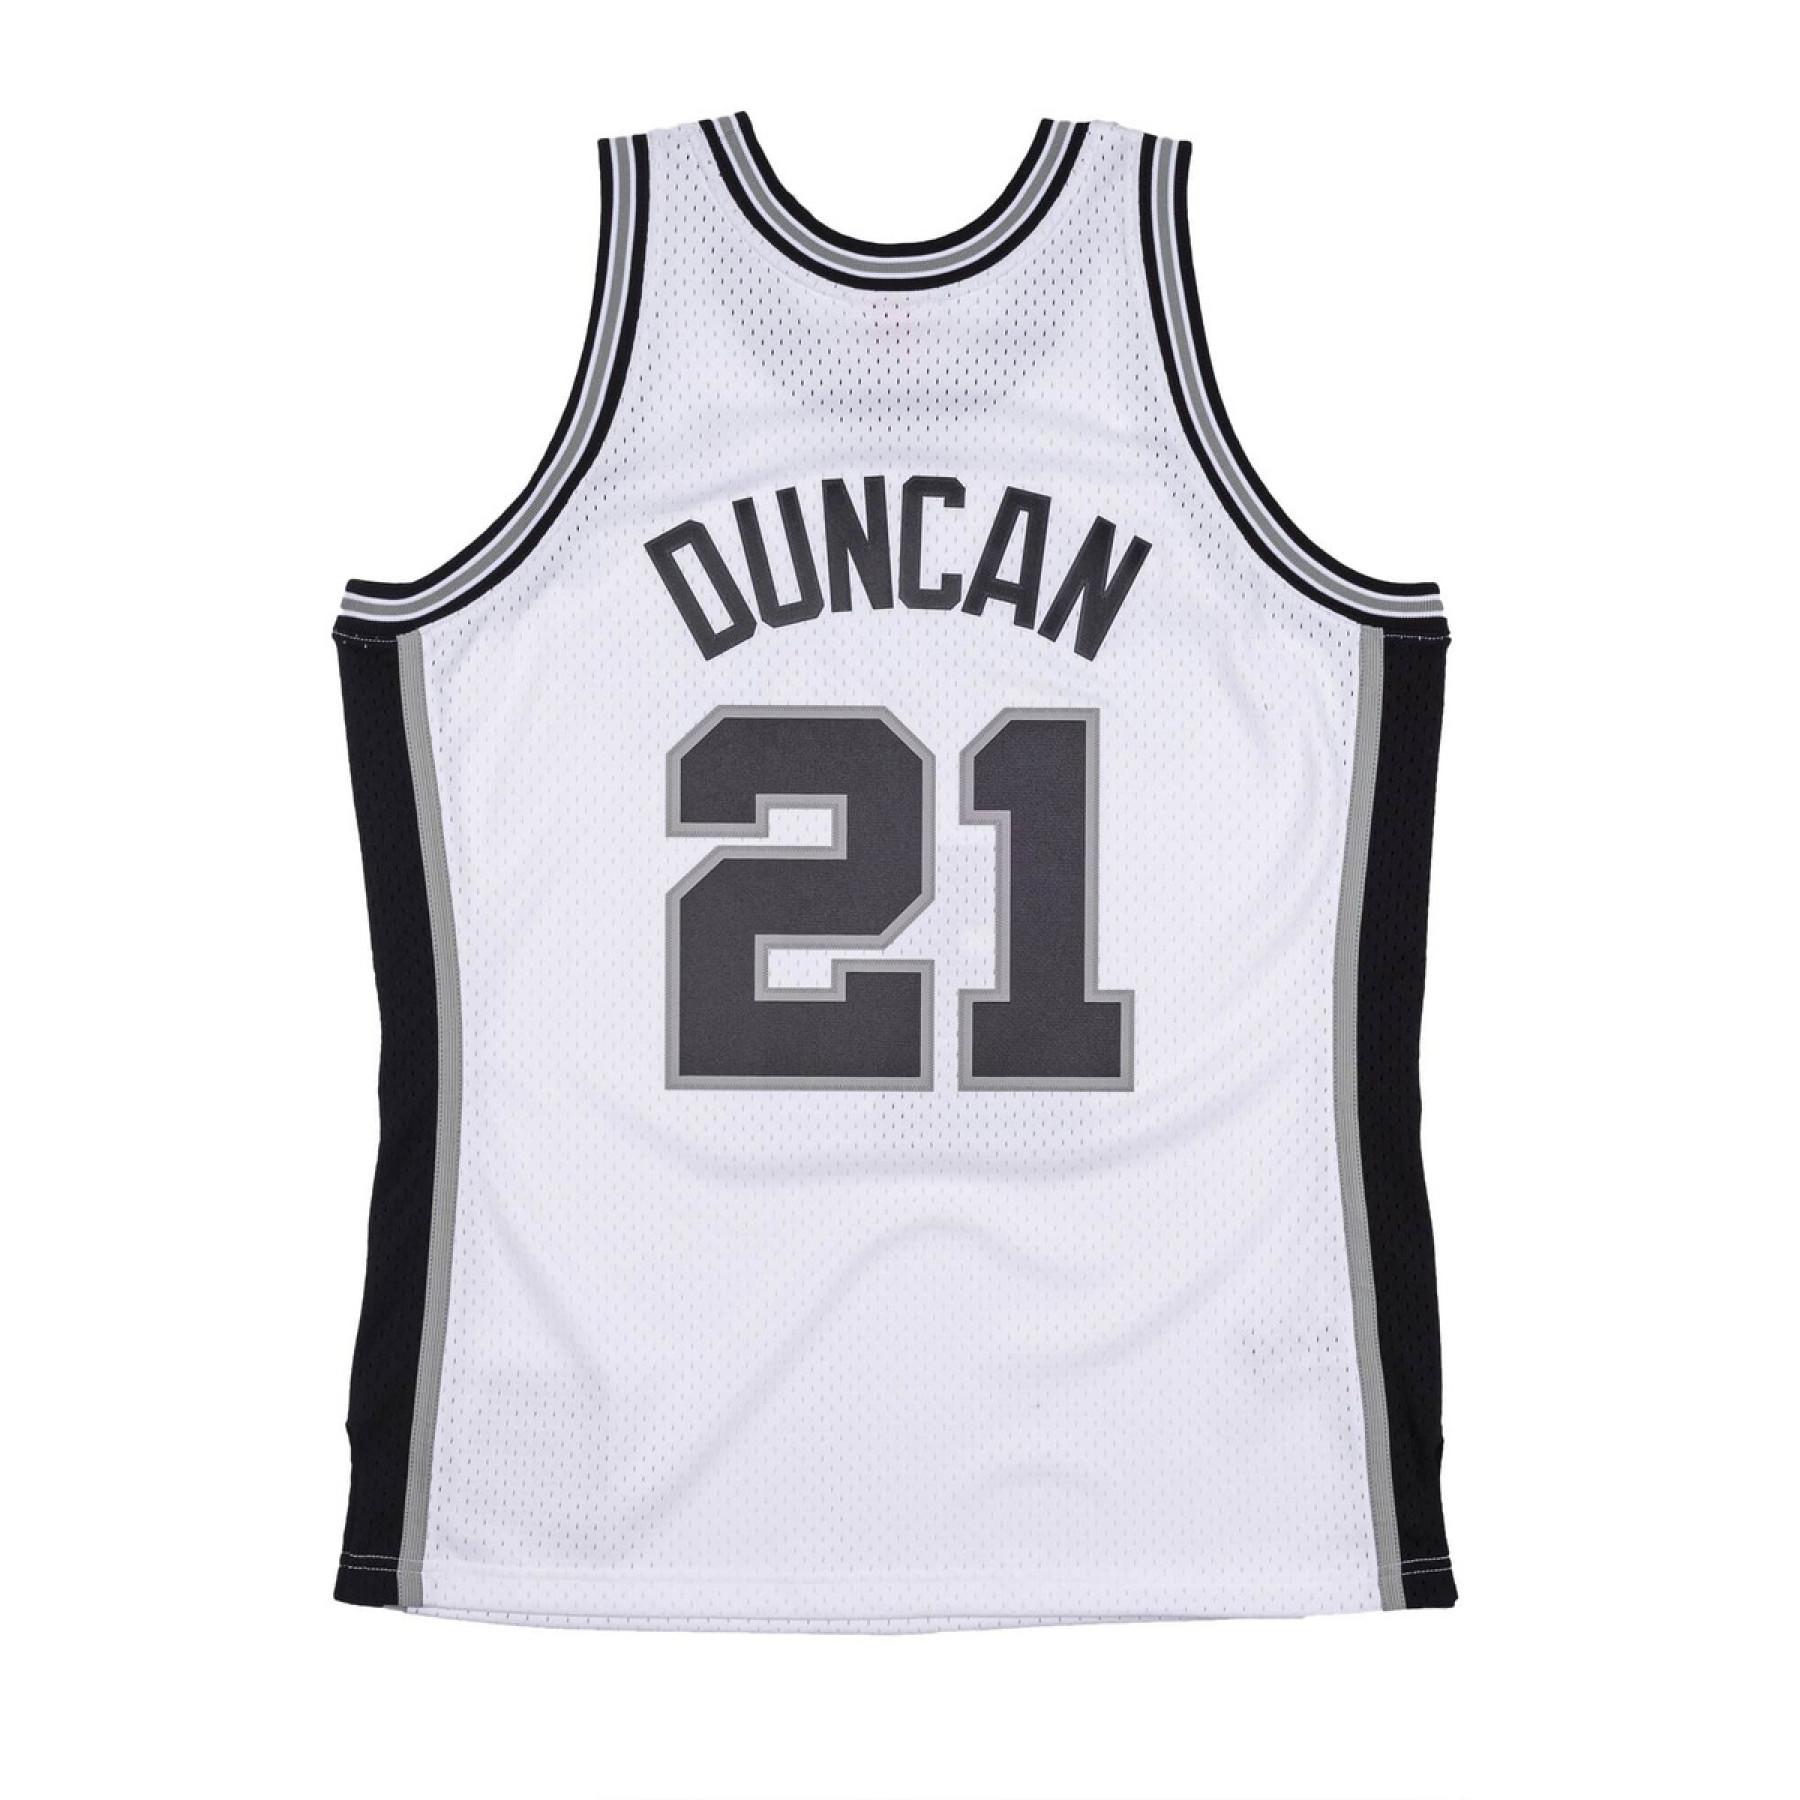 Jersey San Antonio Spurs Tim Duncan 1998/99